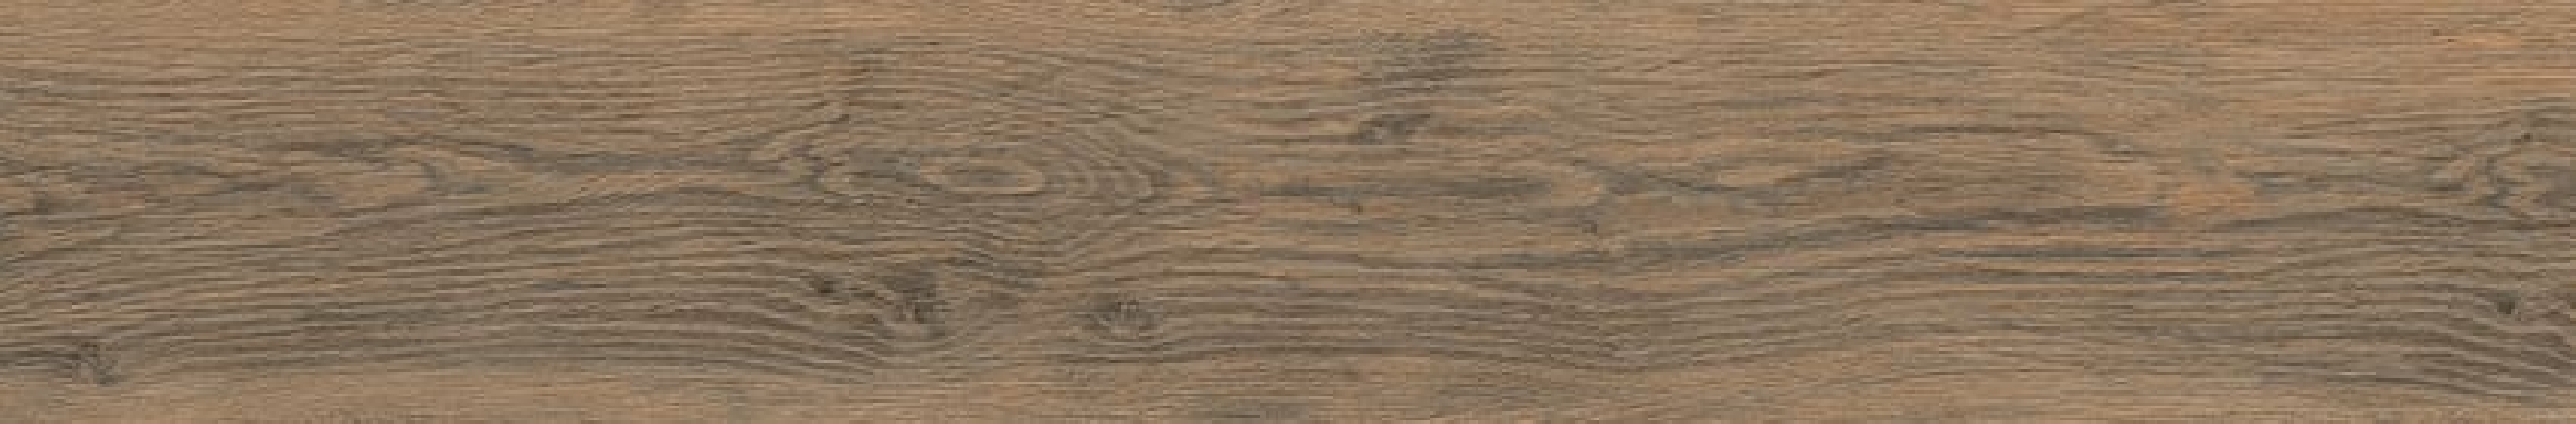 Opoczno Grand Wood Rustic Brown OP498-027-1